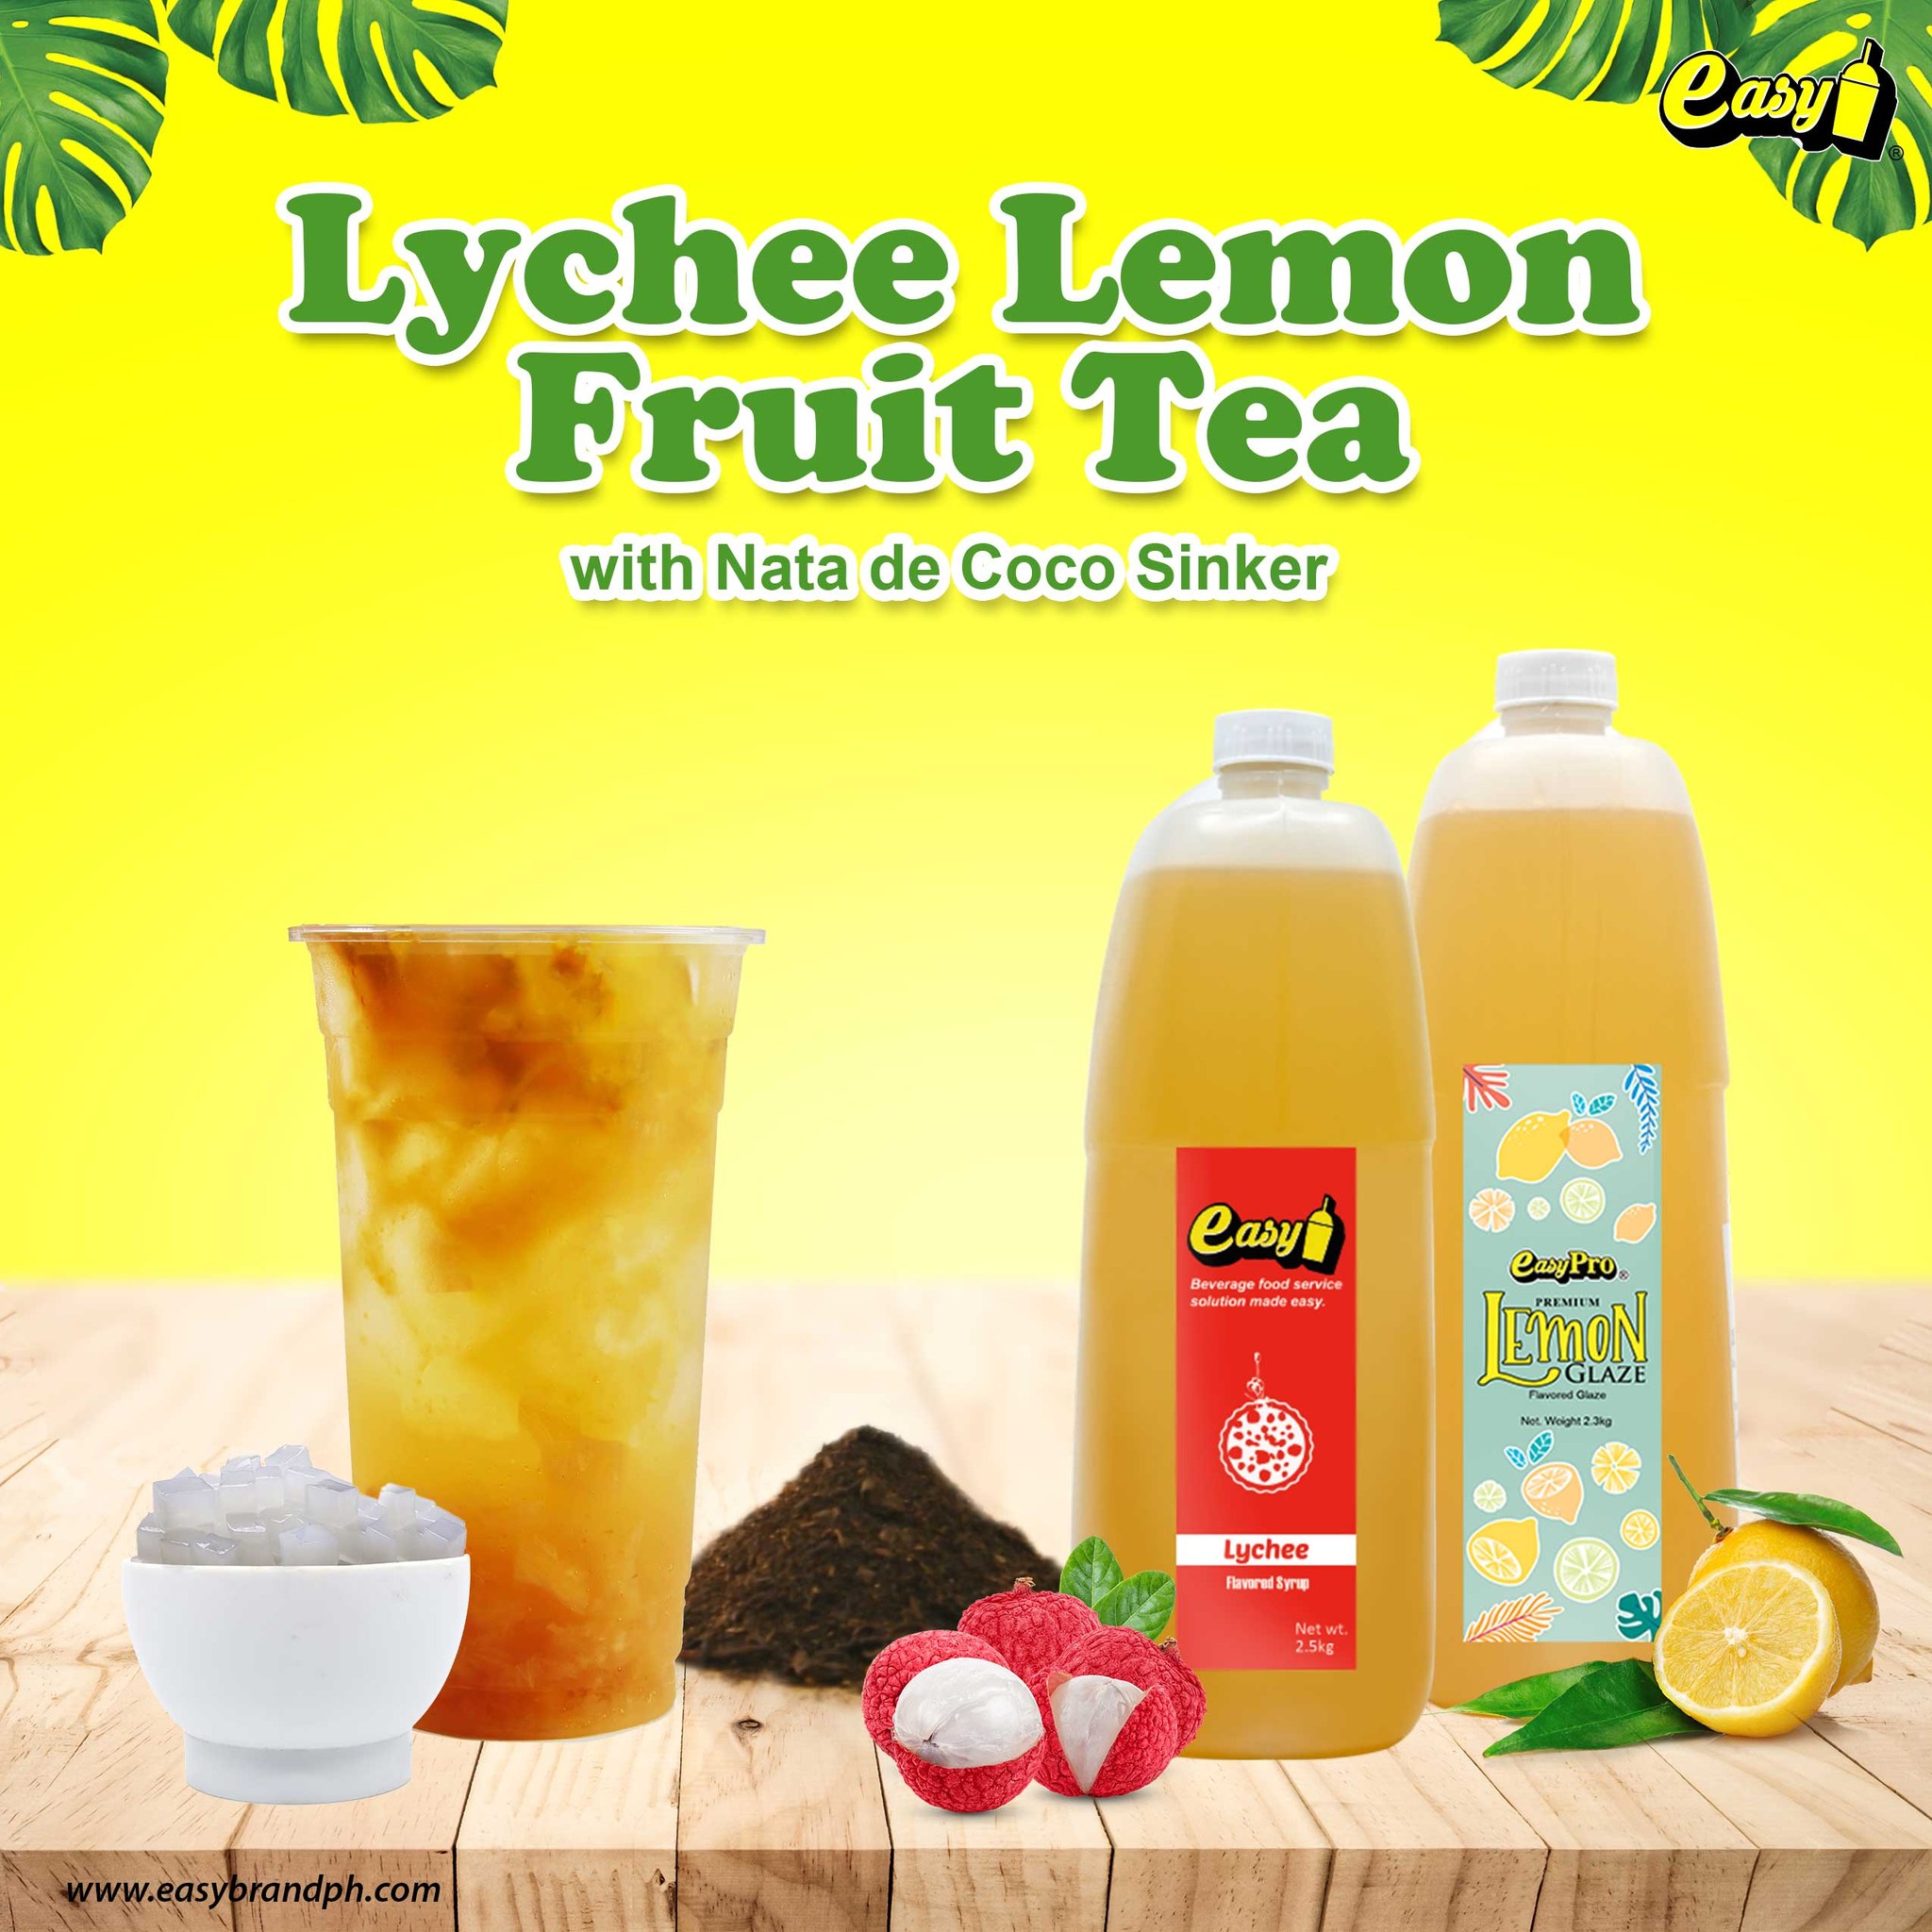 Lychee Lemon Fruit Tea